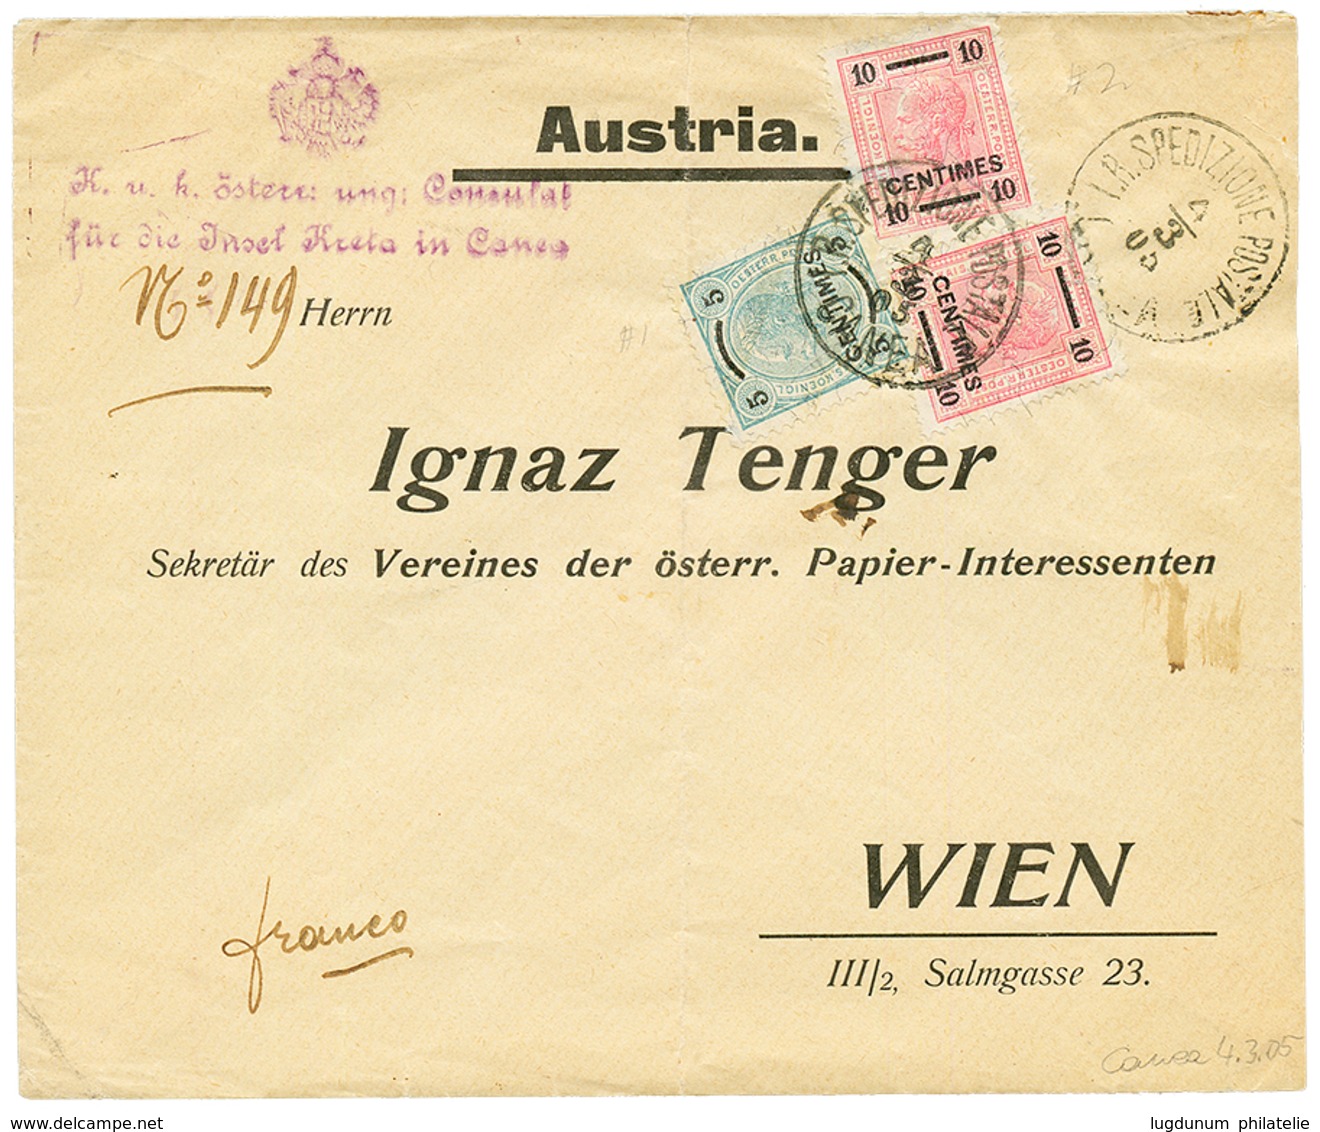 CANEA : 1905 5c + 10c (x2) Canc. I.R SPEDIZIONE POSTAL CANEA On Consular Envelope To WIEN. Vf. - Eastern Austria